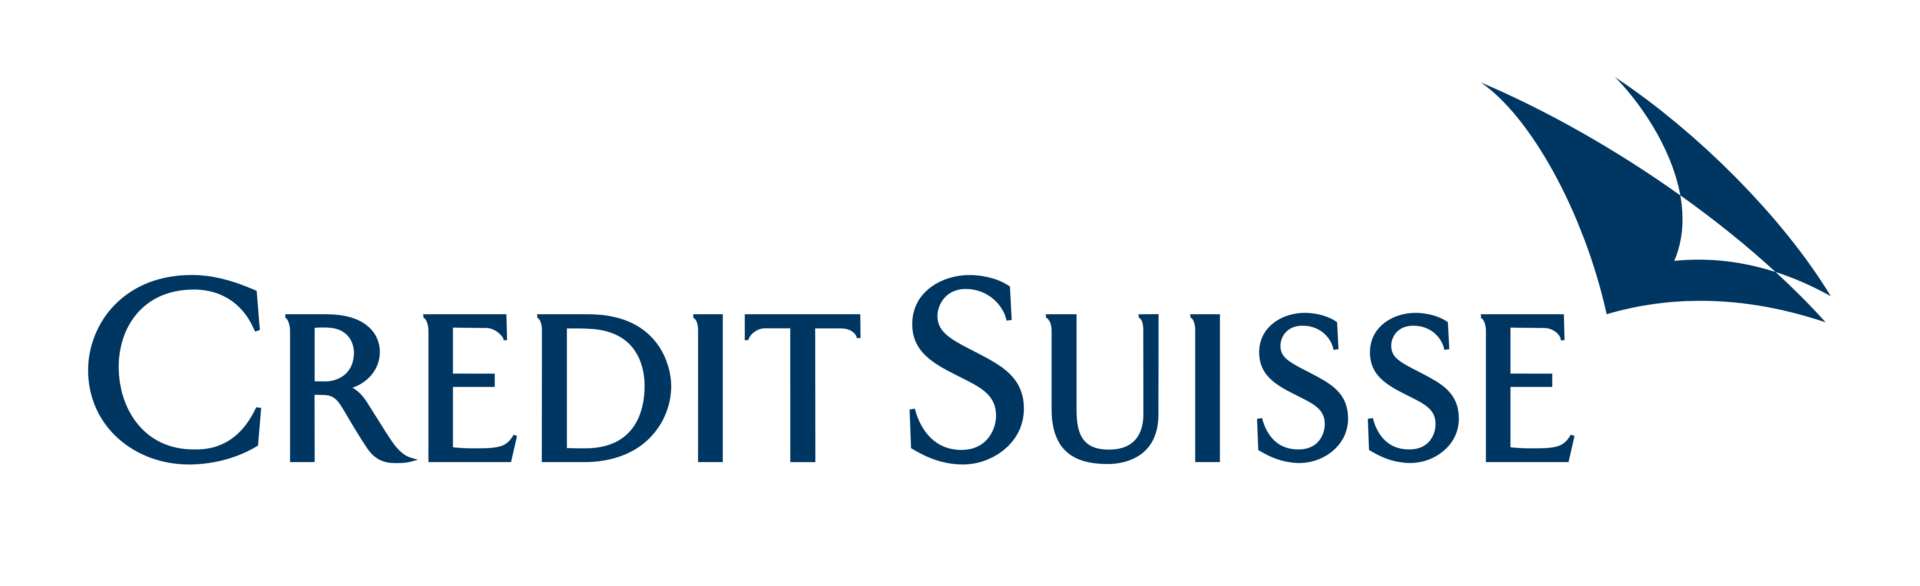 Credit_Suisse_logo